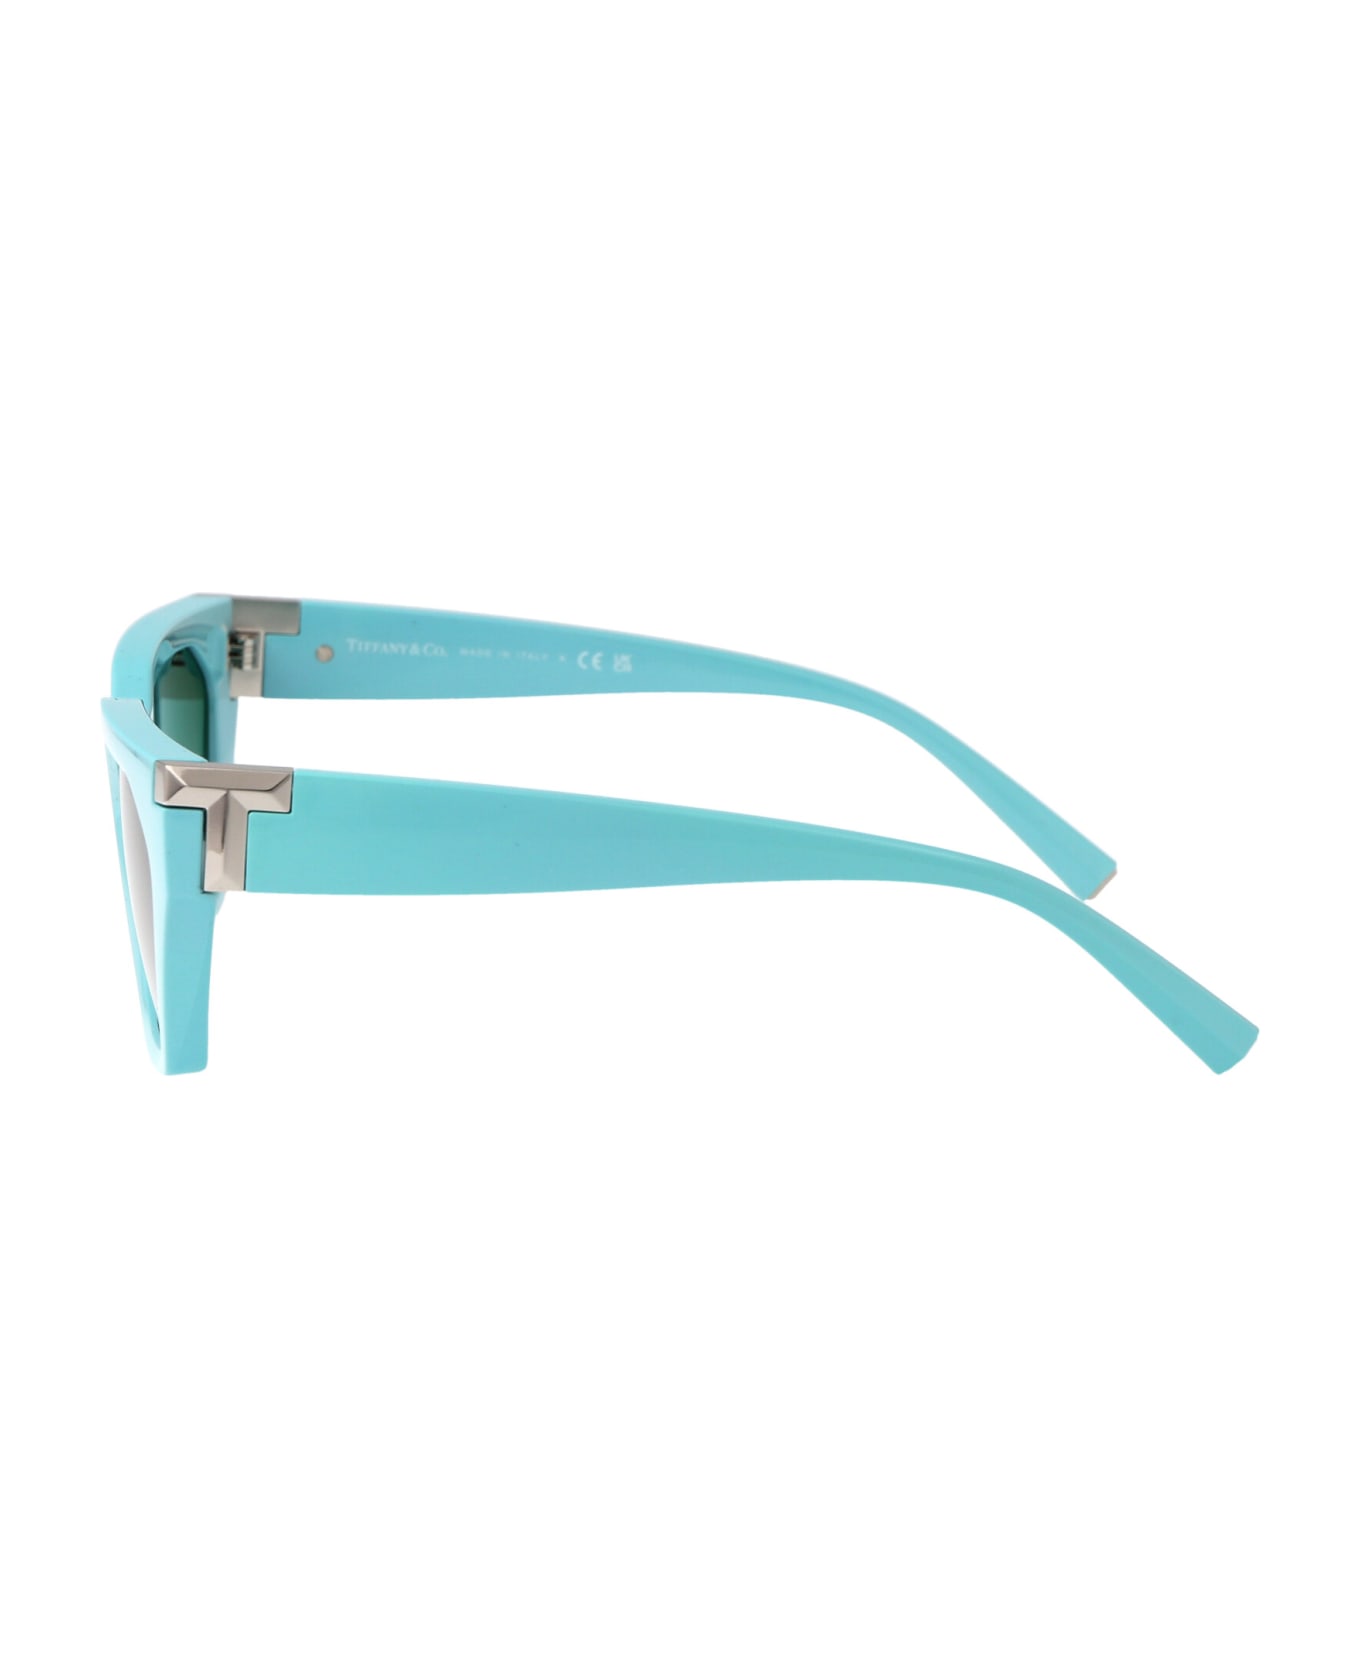 Tiffany & Co. 0tf4205u Sunglasses - 83883C Tiffany Blue サングラス